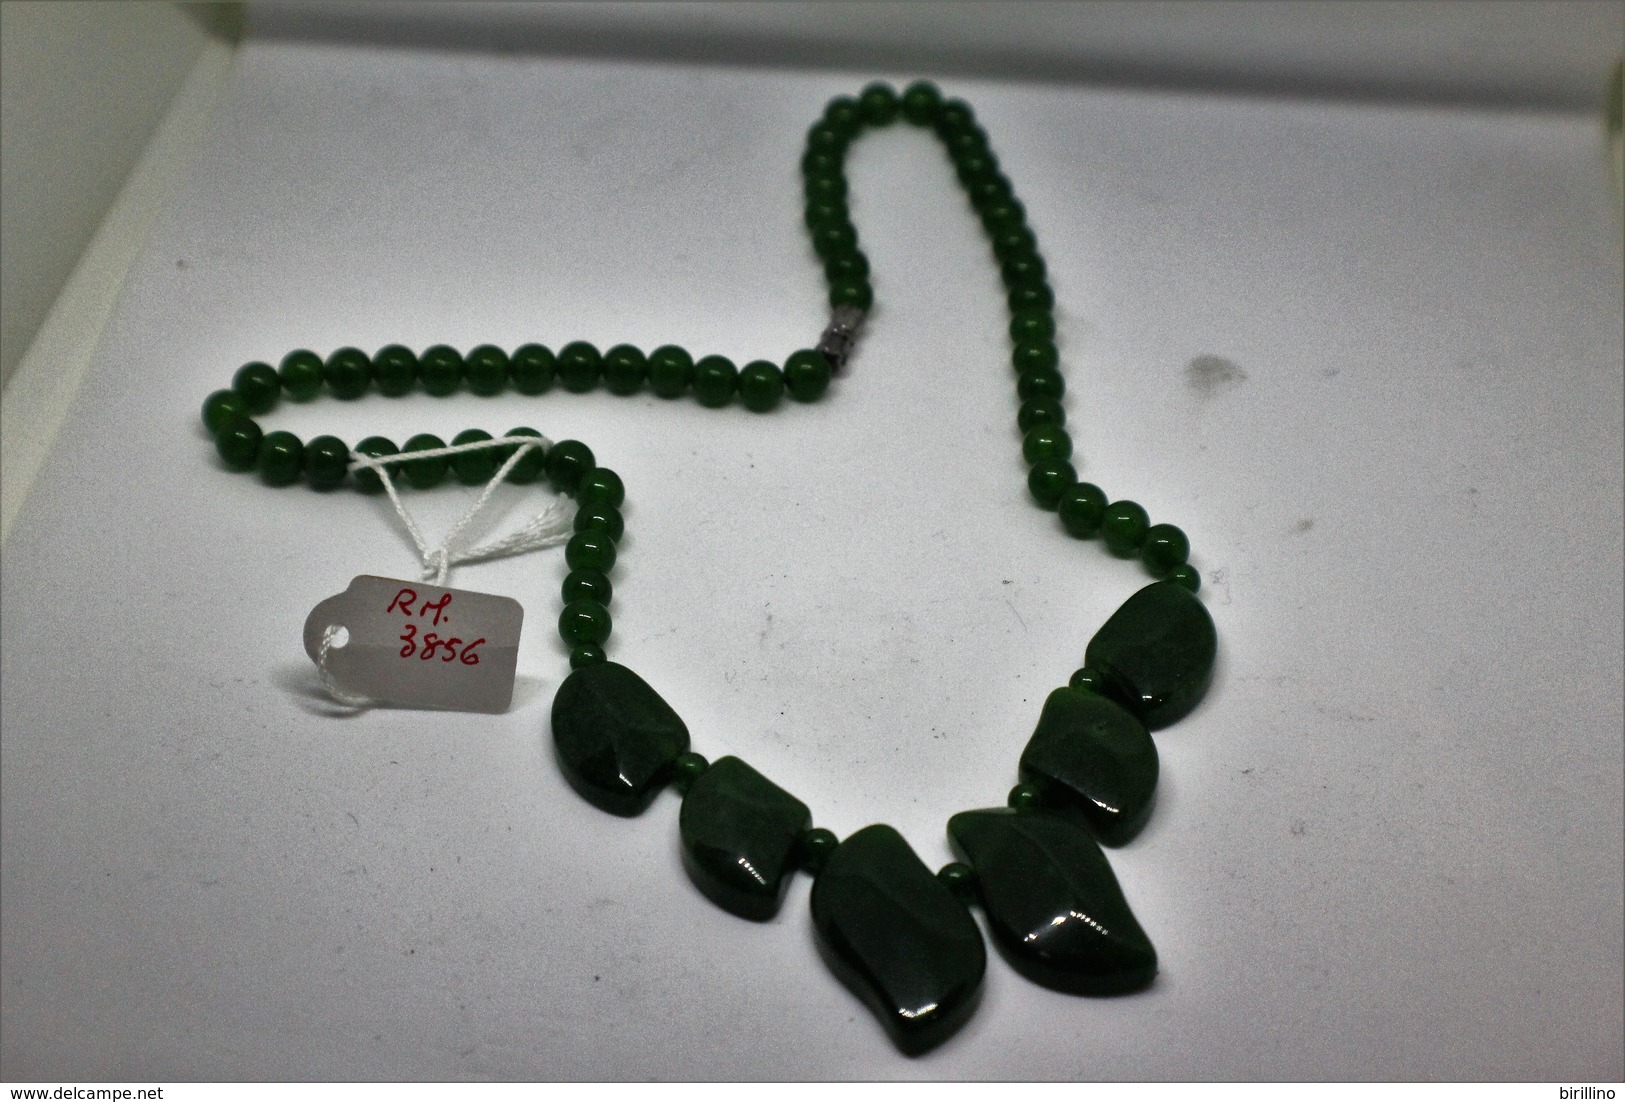 3856 - Collana Di Giada Naturale (serpentino New Jade) Lucidata A Mano. Peso Totale 44 Gr. - Oriental Art